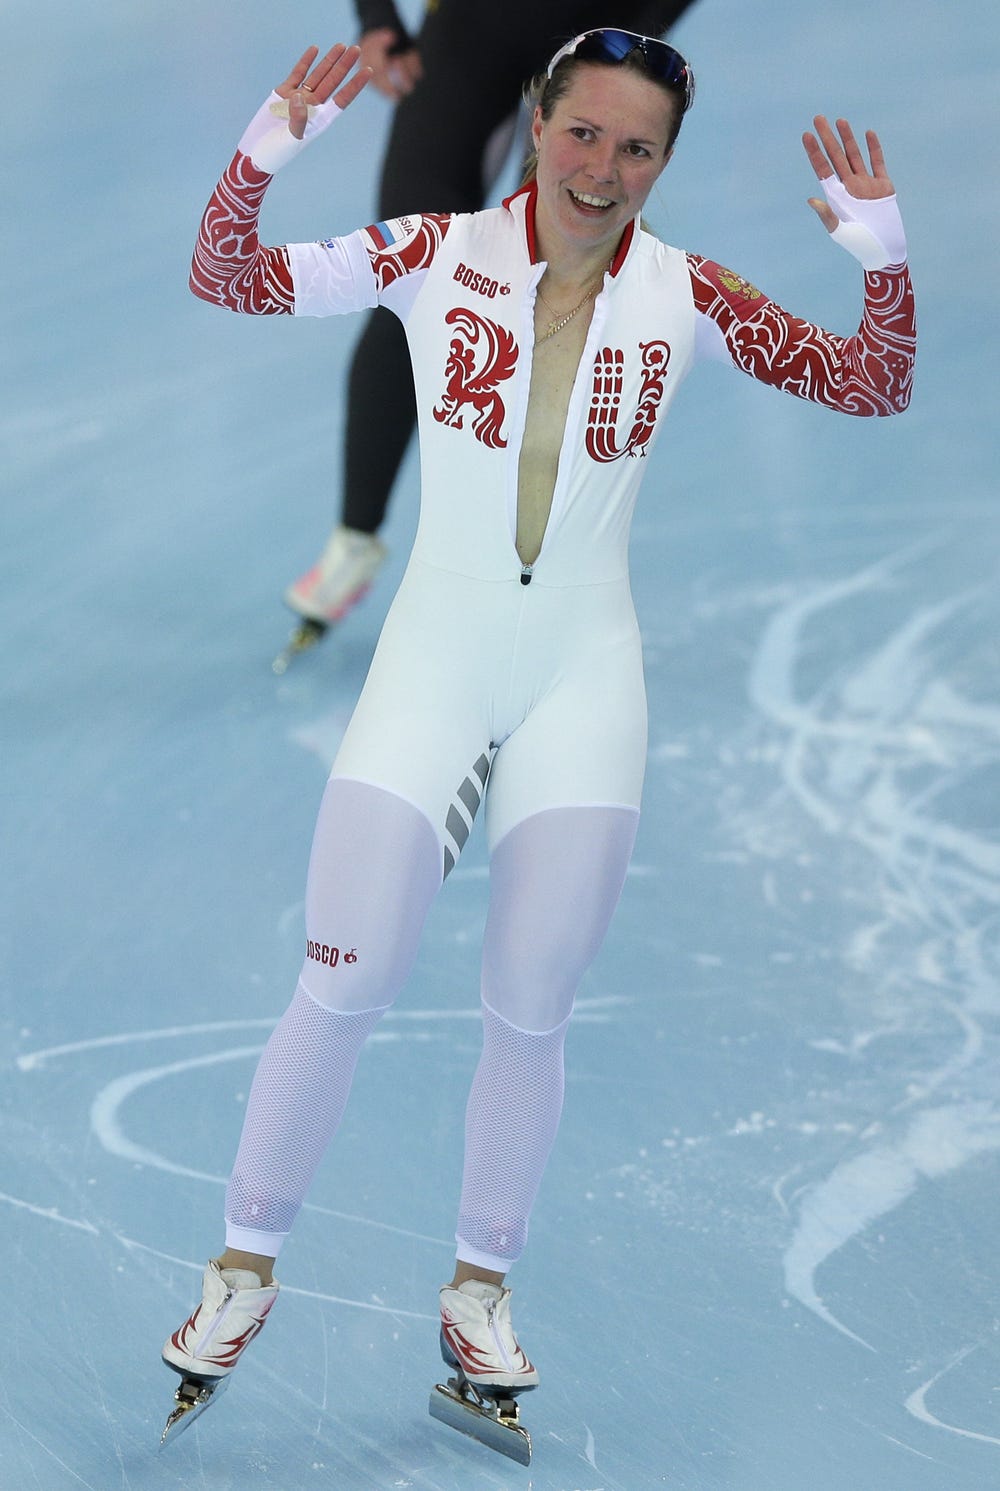 dana dobrota recommends nude female ice skaters pic